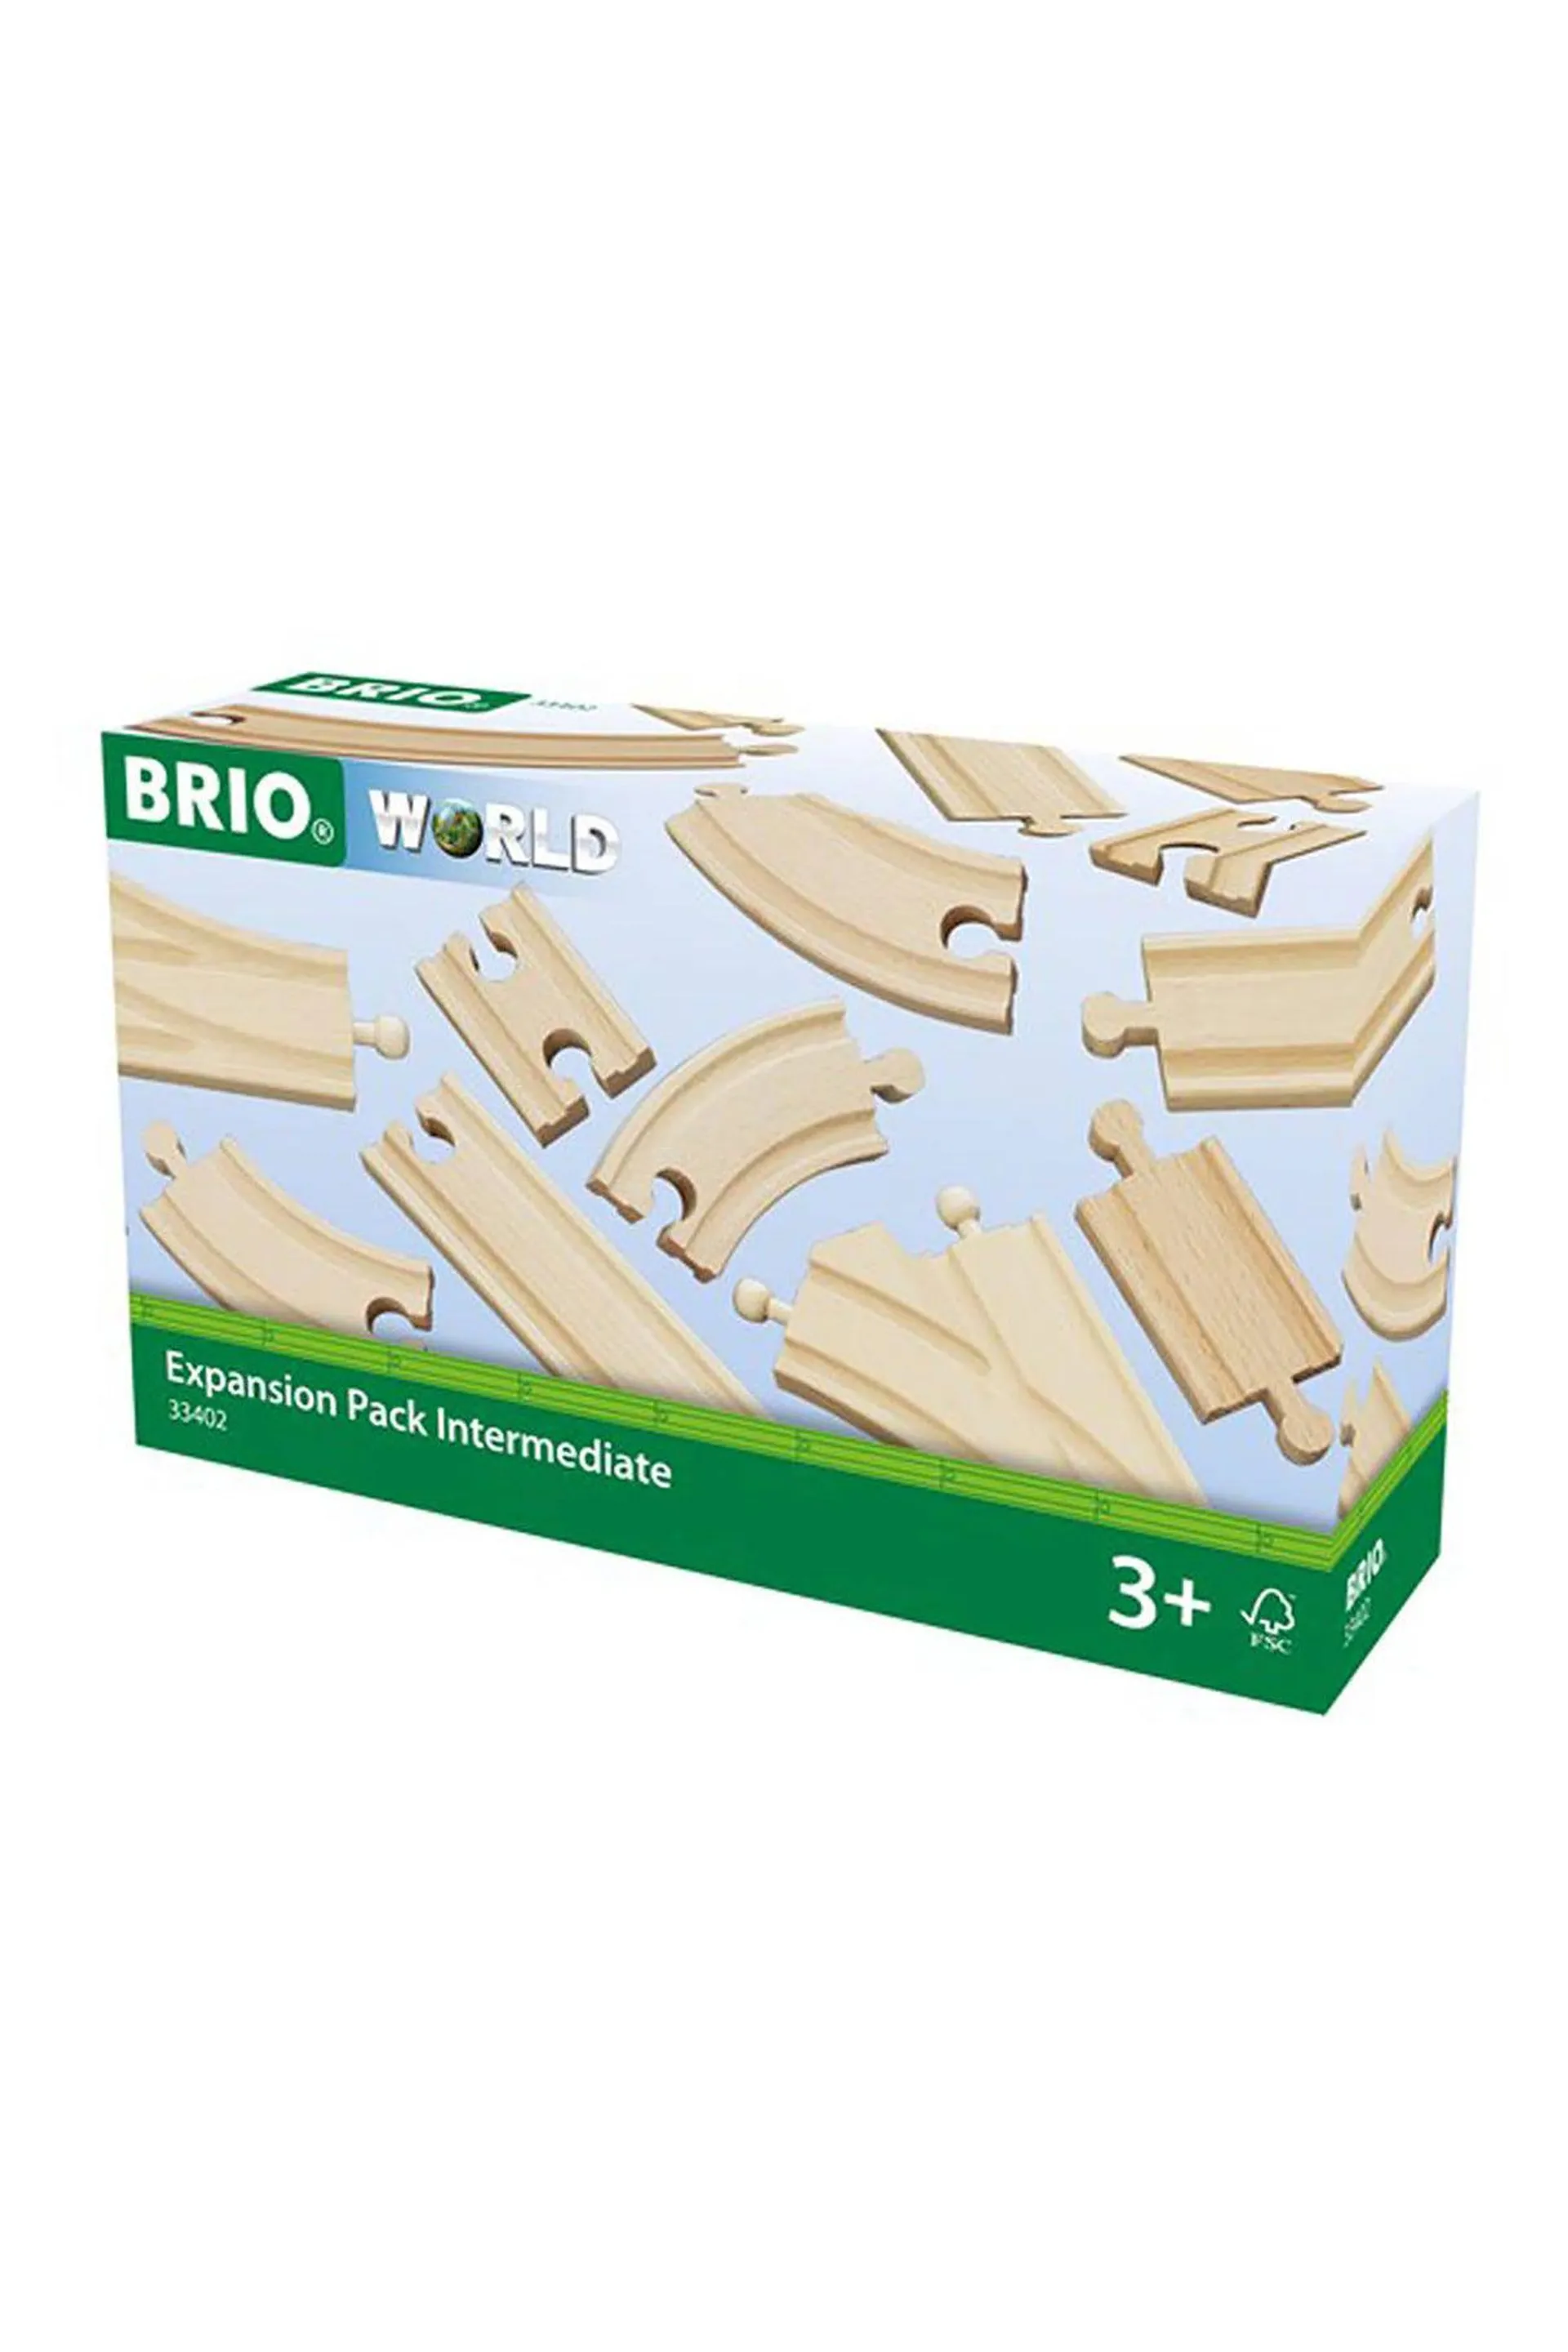 BRIO 33402 Intermediate Expansion Pack